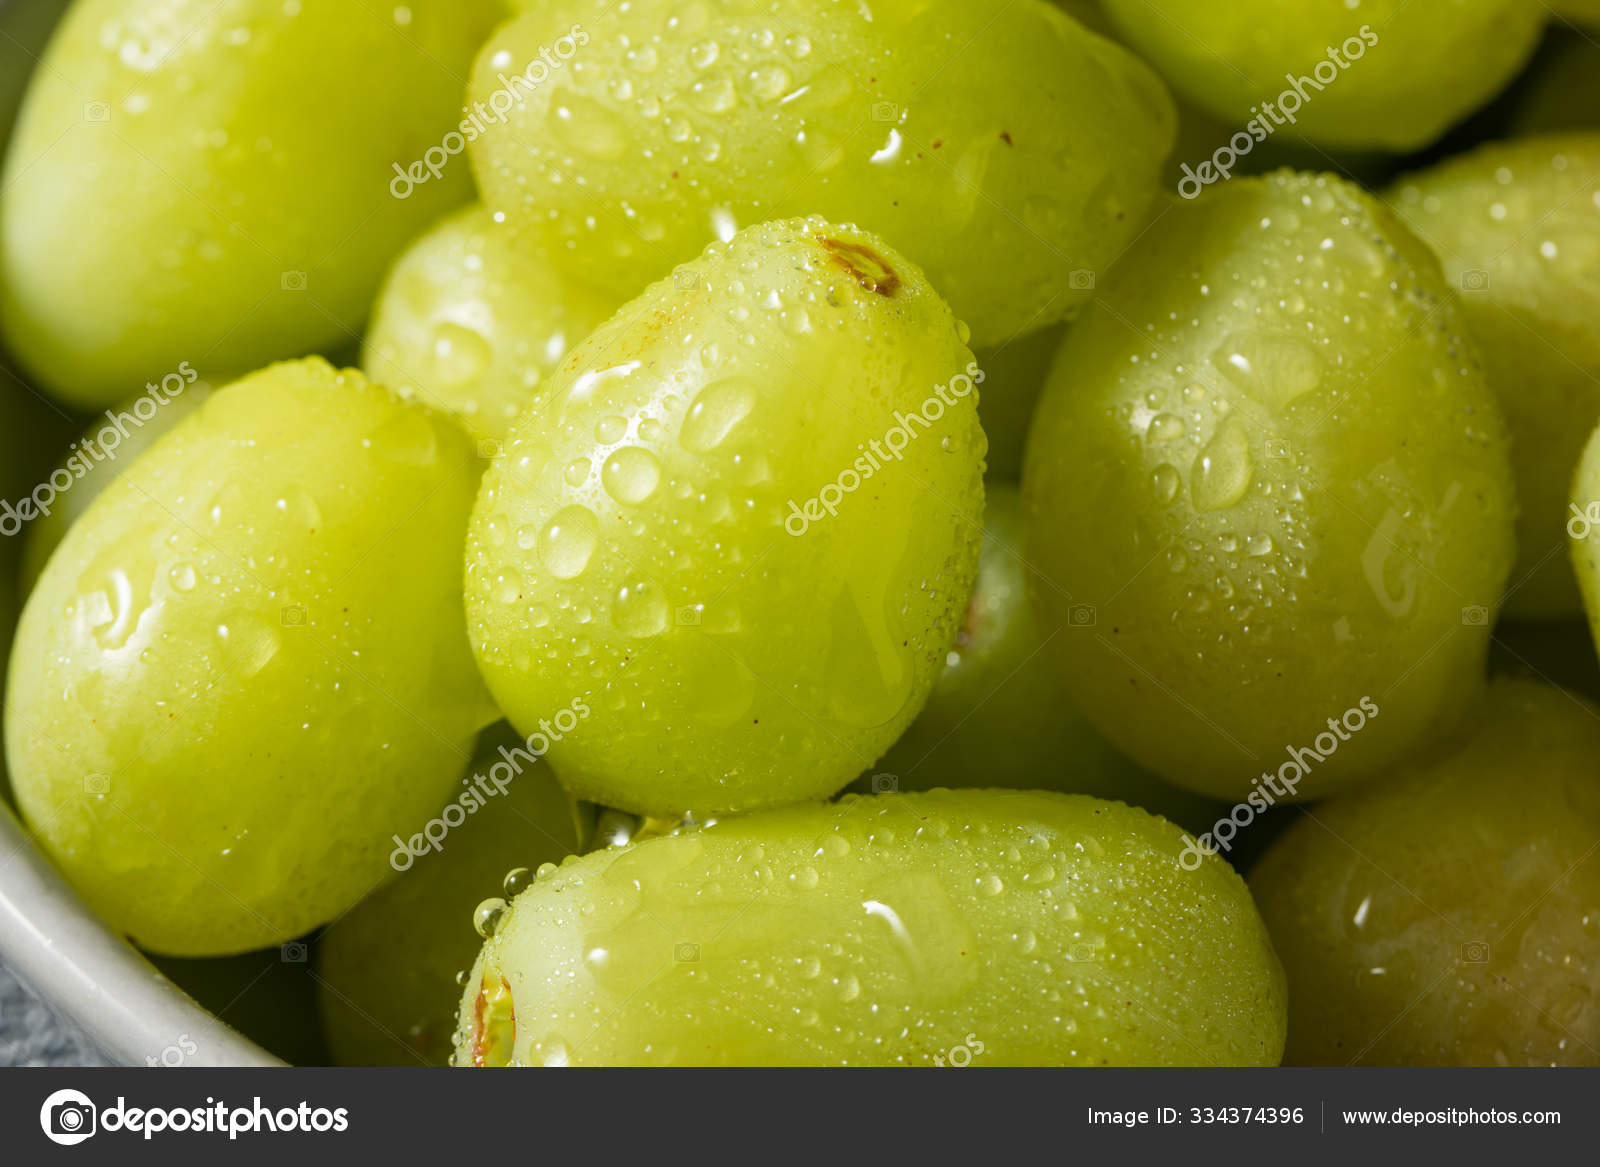 https://st3.depositphotos.com/1692343/33437/i/1600/depositphotos_334374396-stock-photo-organic-raw-green-grapes.jpg